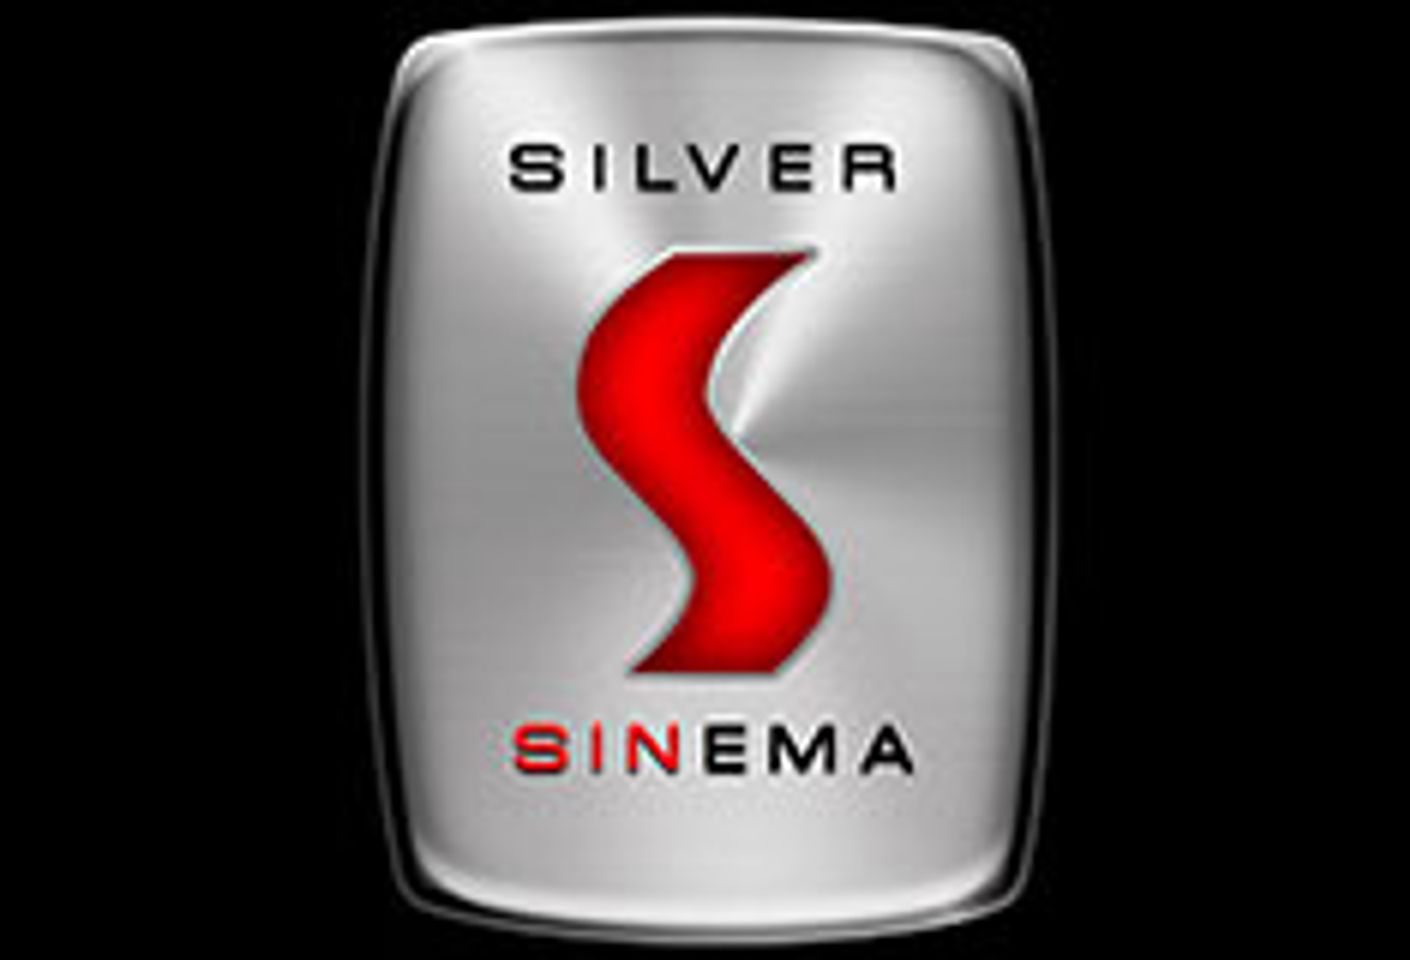 Silver Sinema Announces Silvercash Albert as VP of Business Development